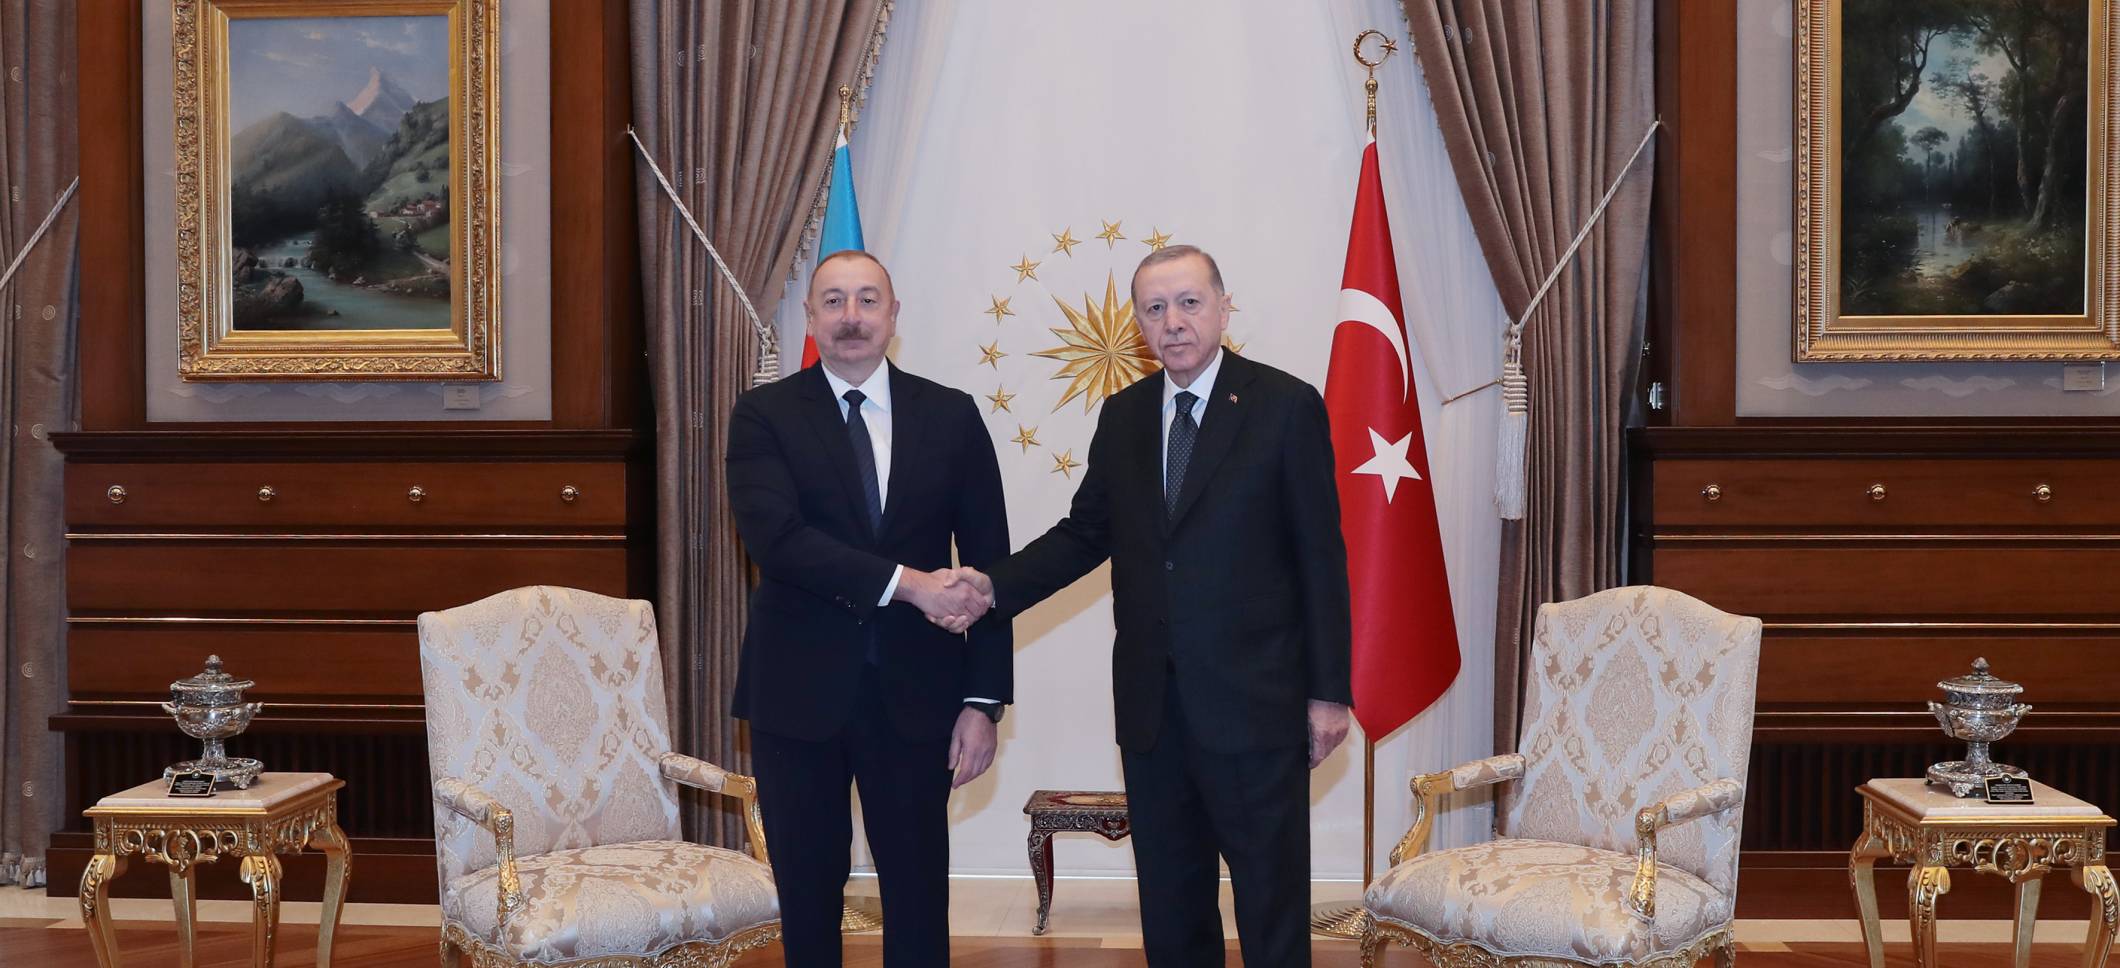 Ilham Aliyev's one-on-one meeting with President of the Republic of Türkiye Recep Tayyip Erdogan has started